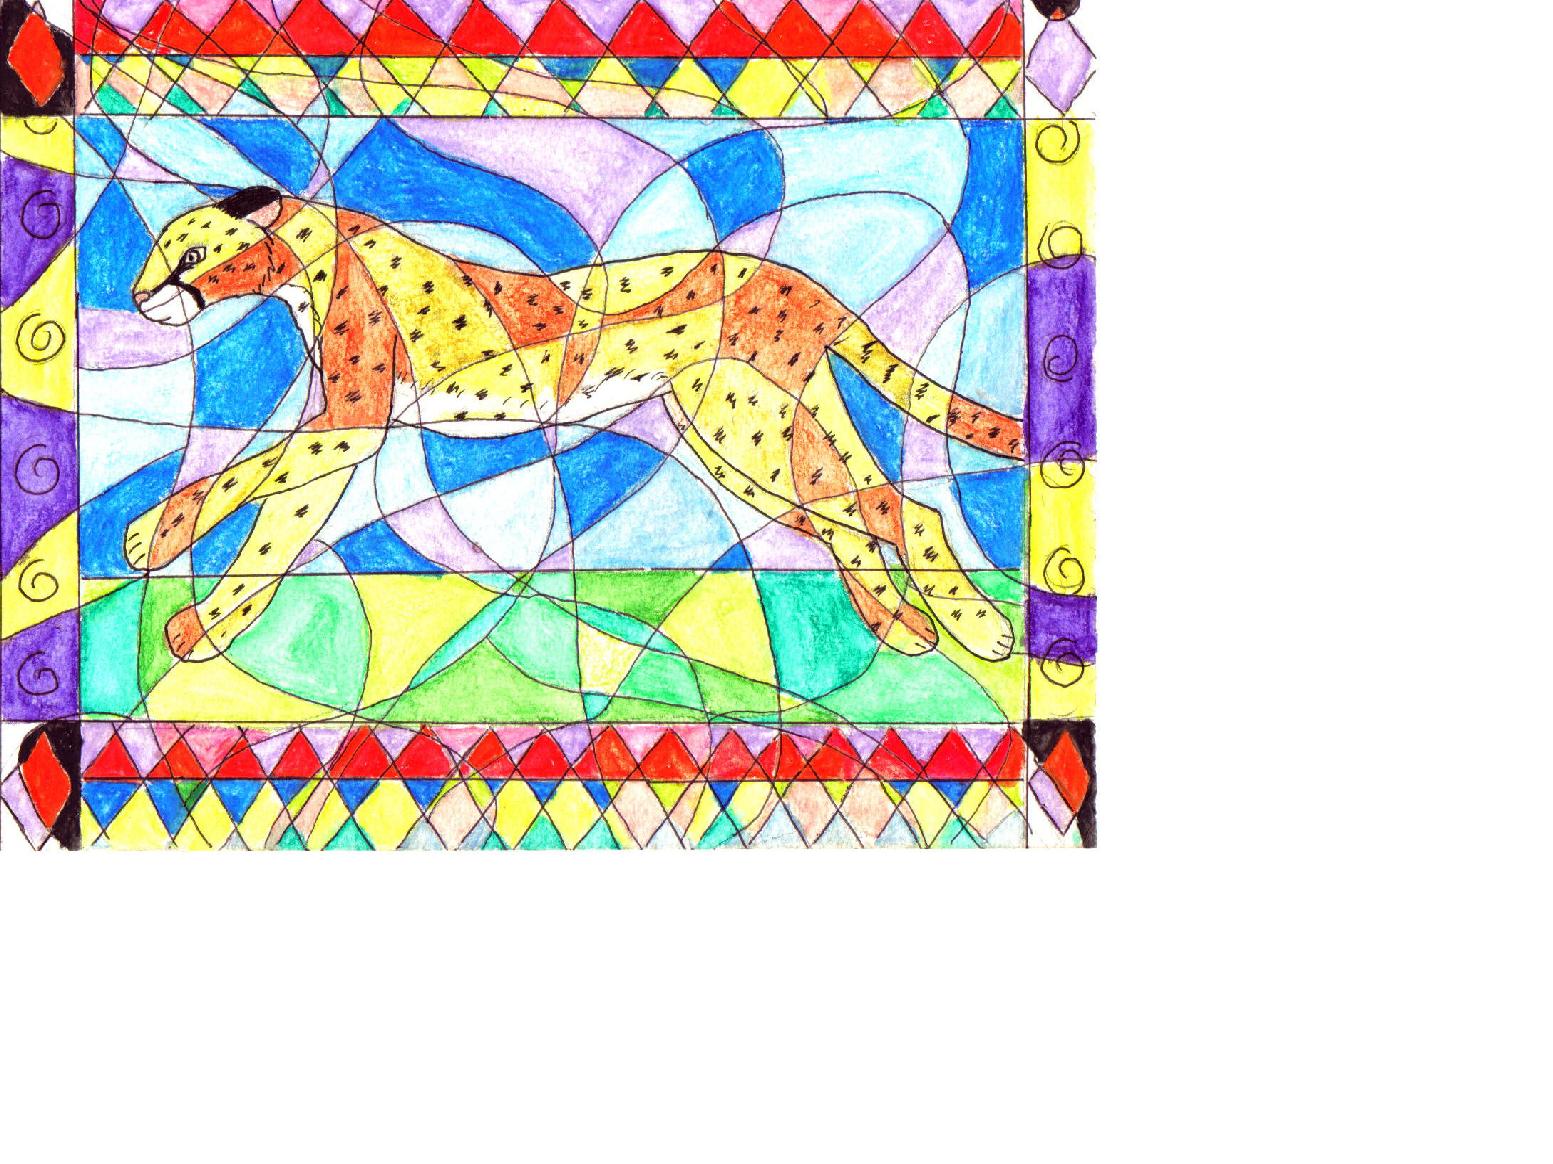 miti-coloured cheetah by Fluffybunny